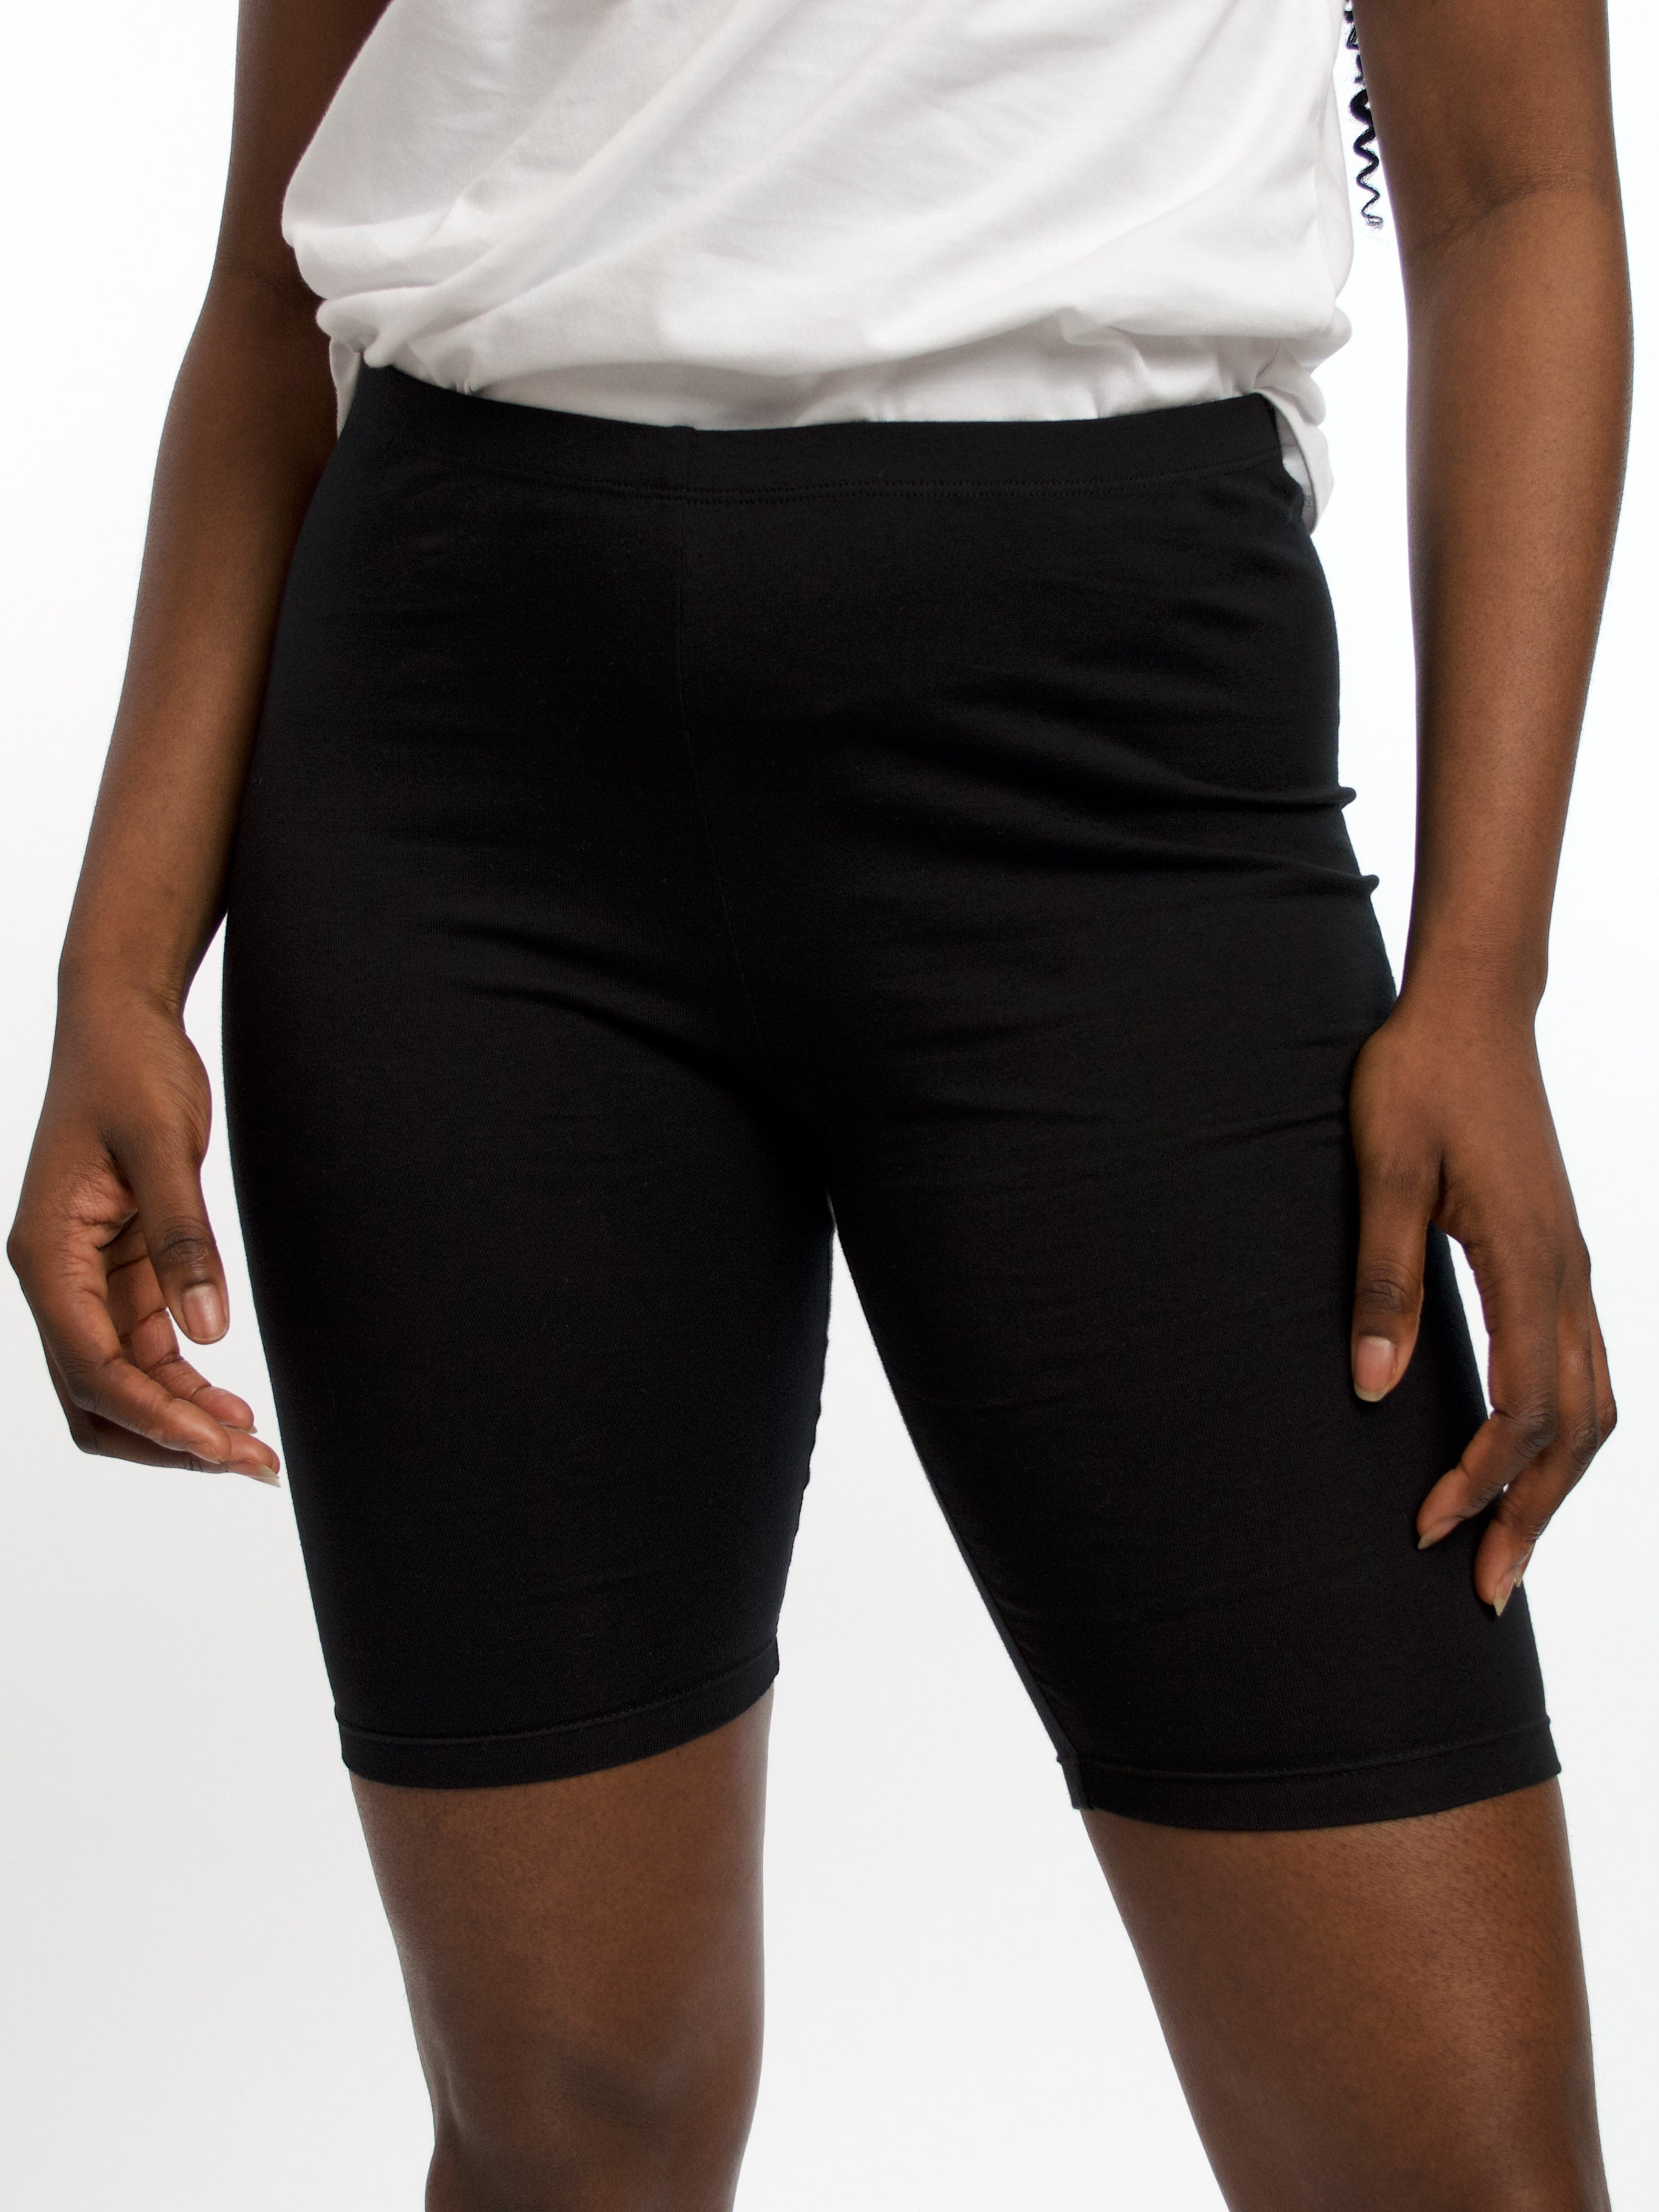 Buy NexiEpoch 2 Pack Plus Size Biker Shorts for Women – 5 High